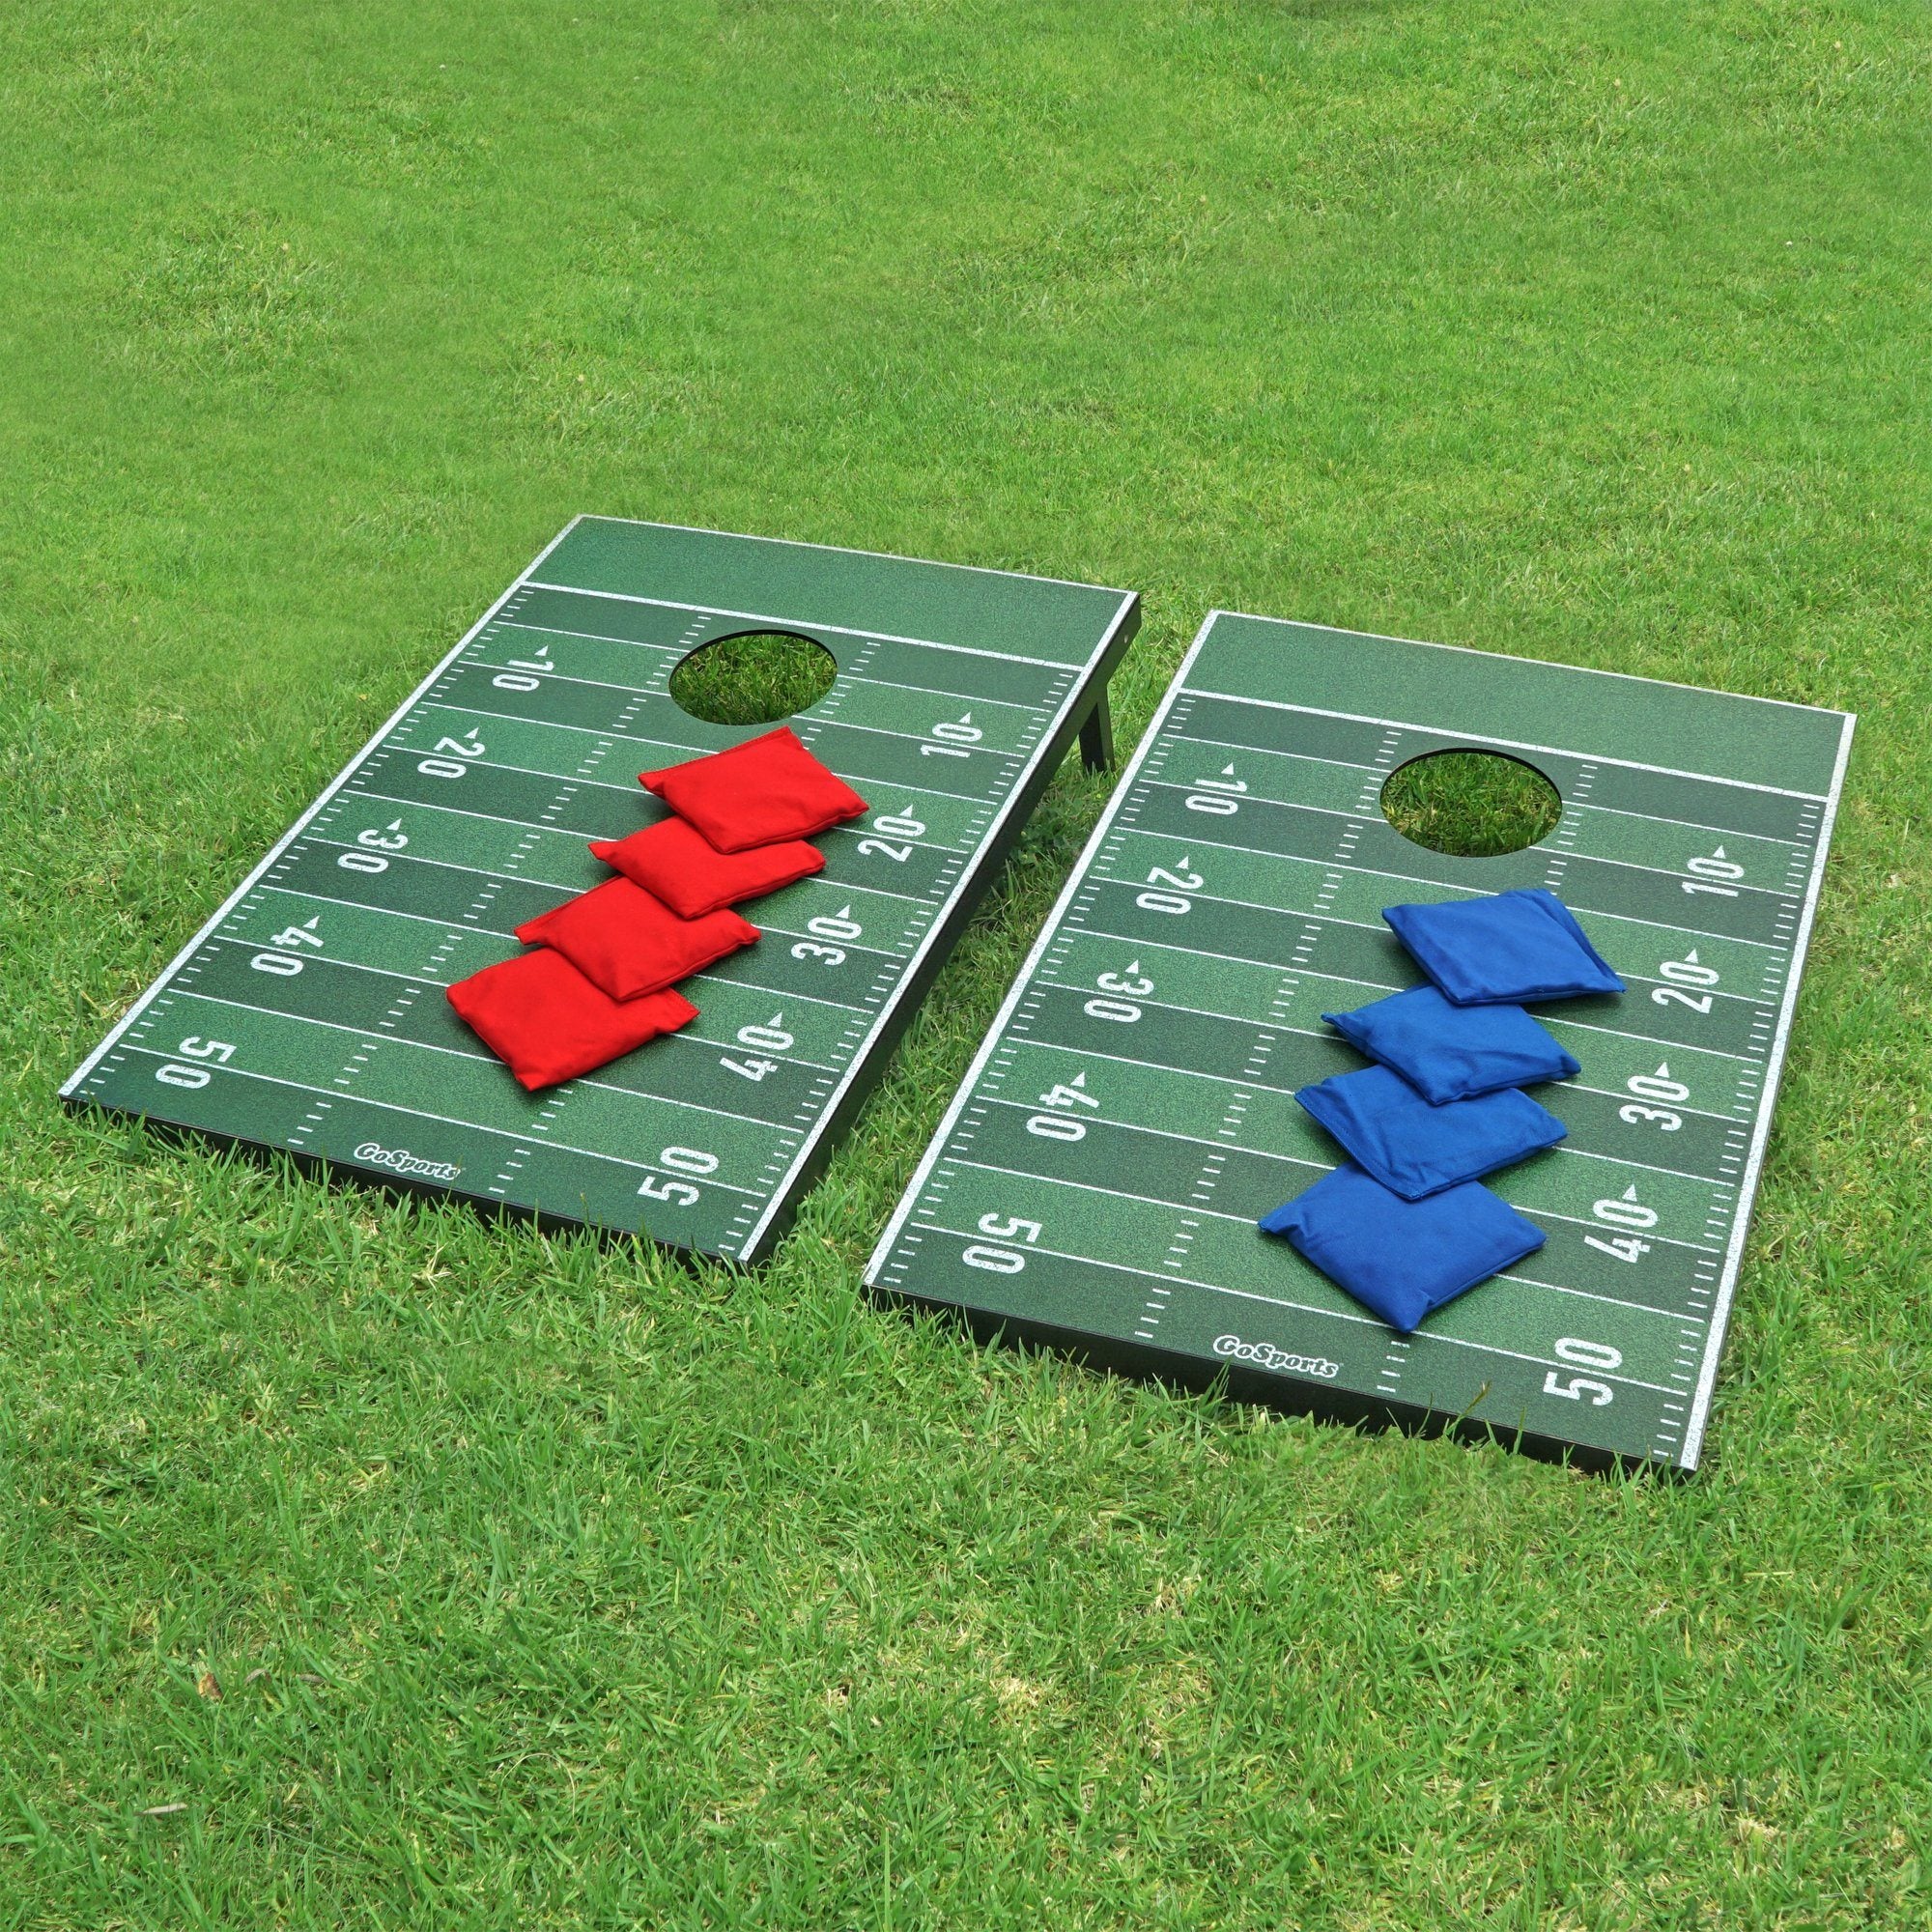 Slick Woody's Tailgate Indianapolis Football Cornhole Board Set in Blue - TGB1356